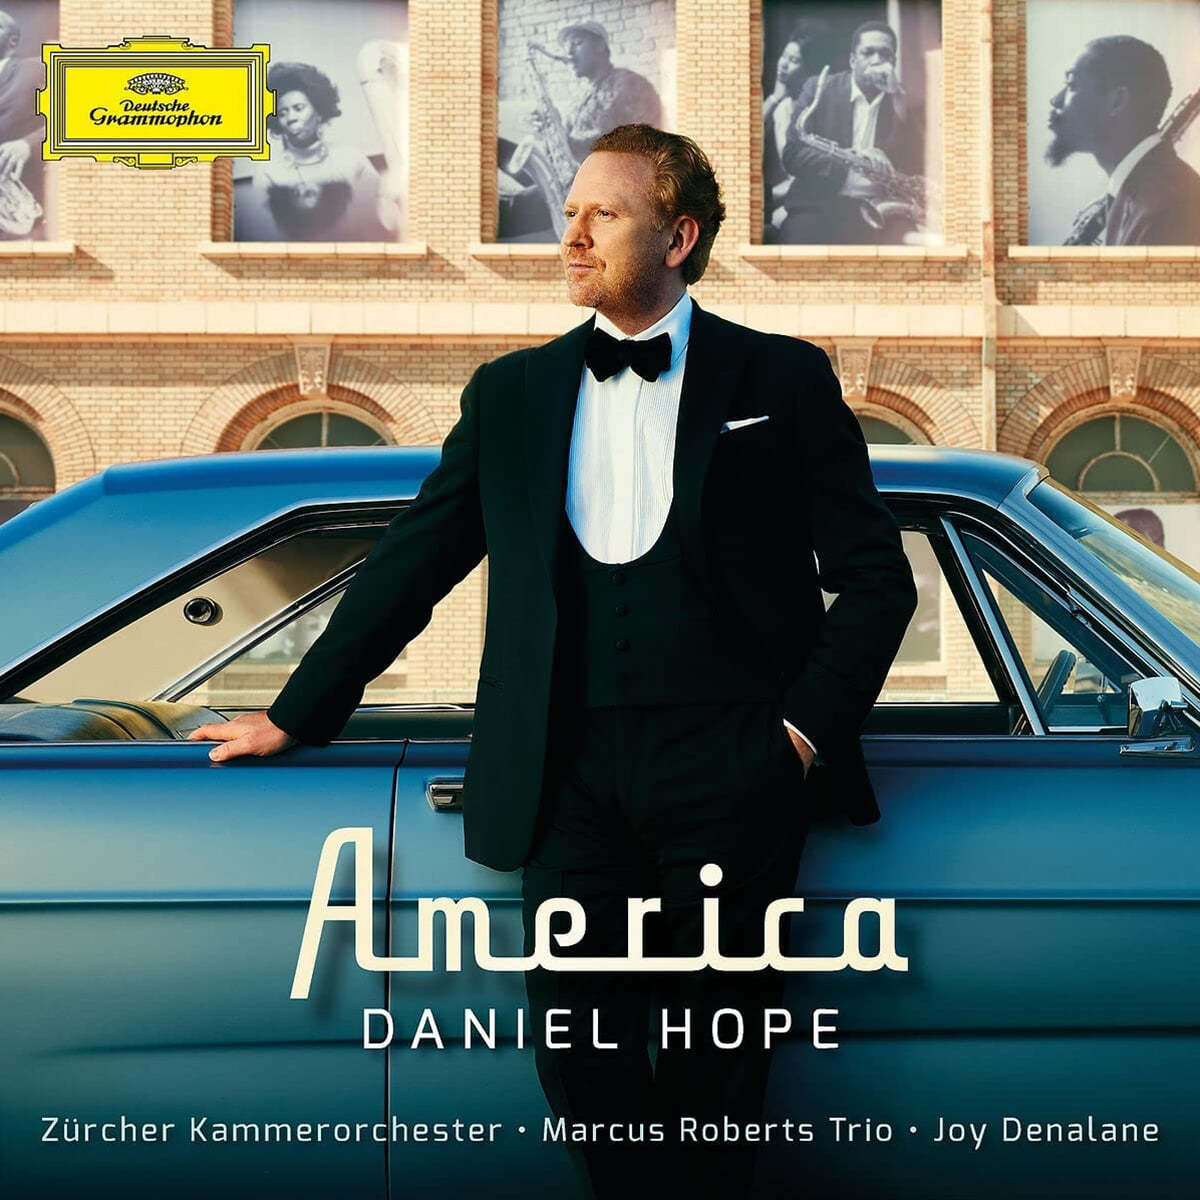 Daniel Hope 다니엘 호프가 편곡하여 연주하는 미국 작곡가들의 음악 모음집 (America) 